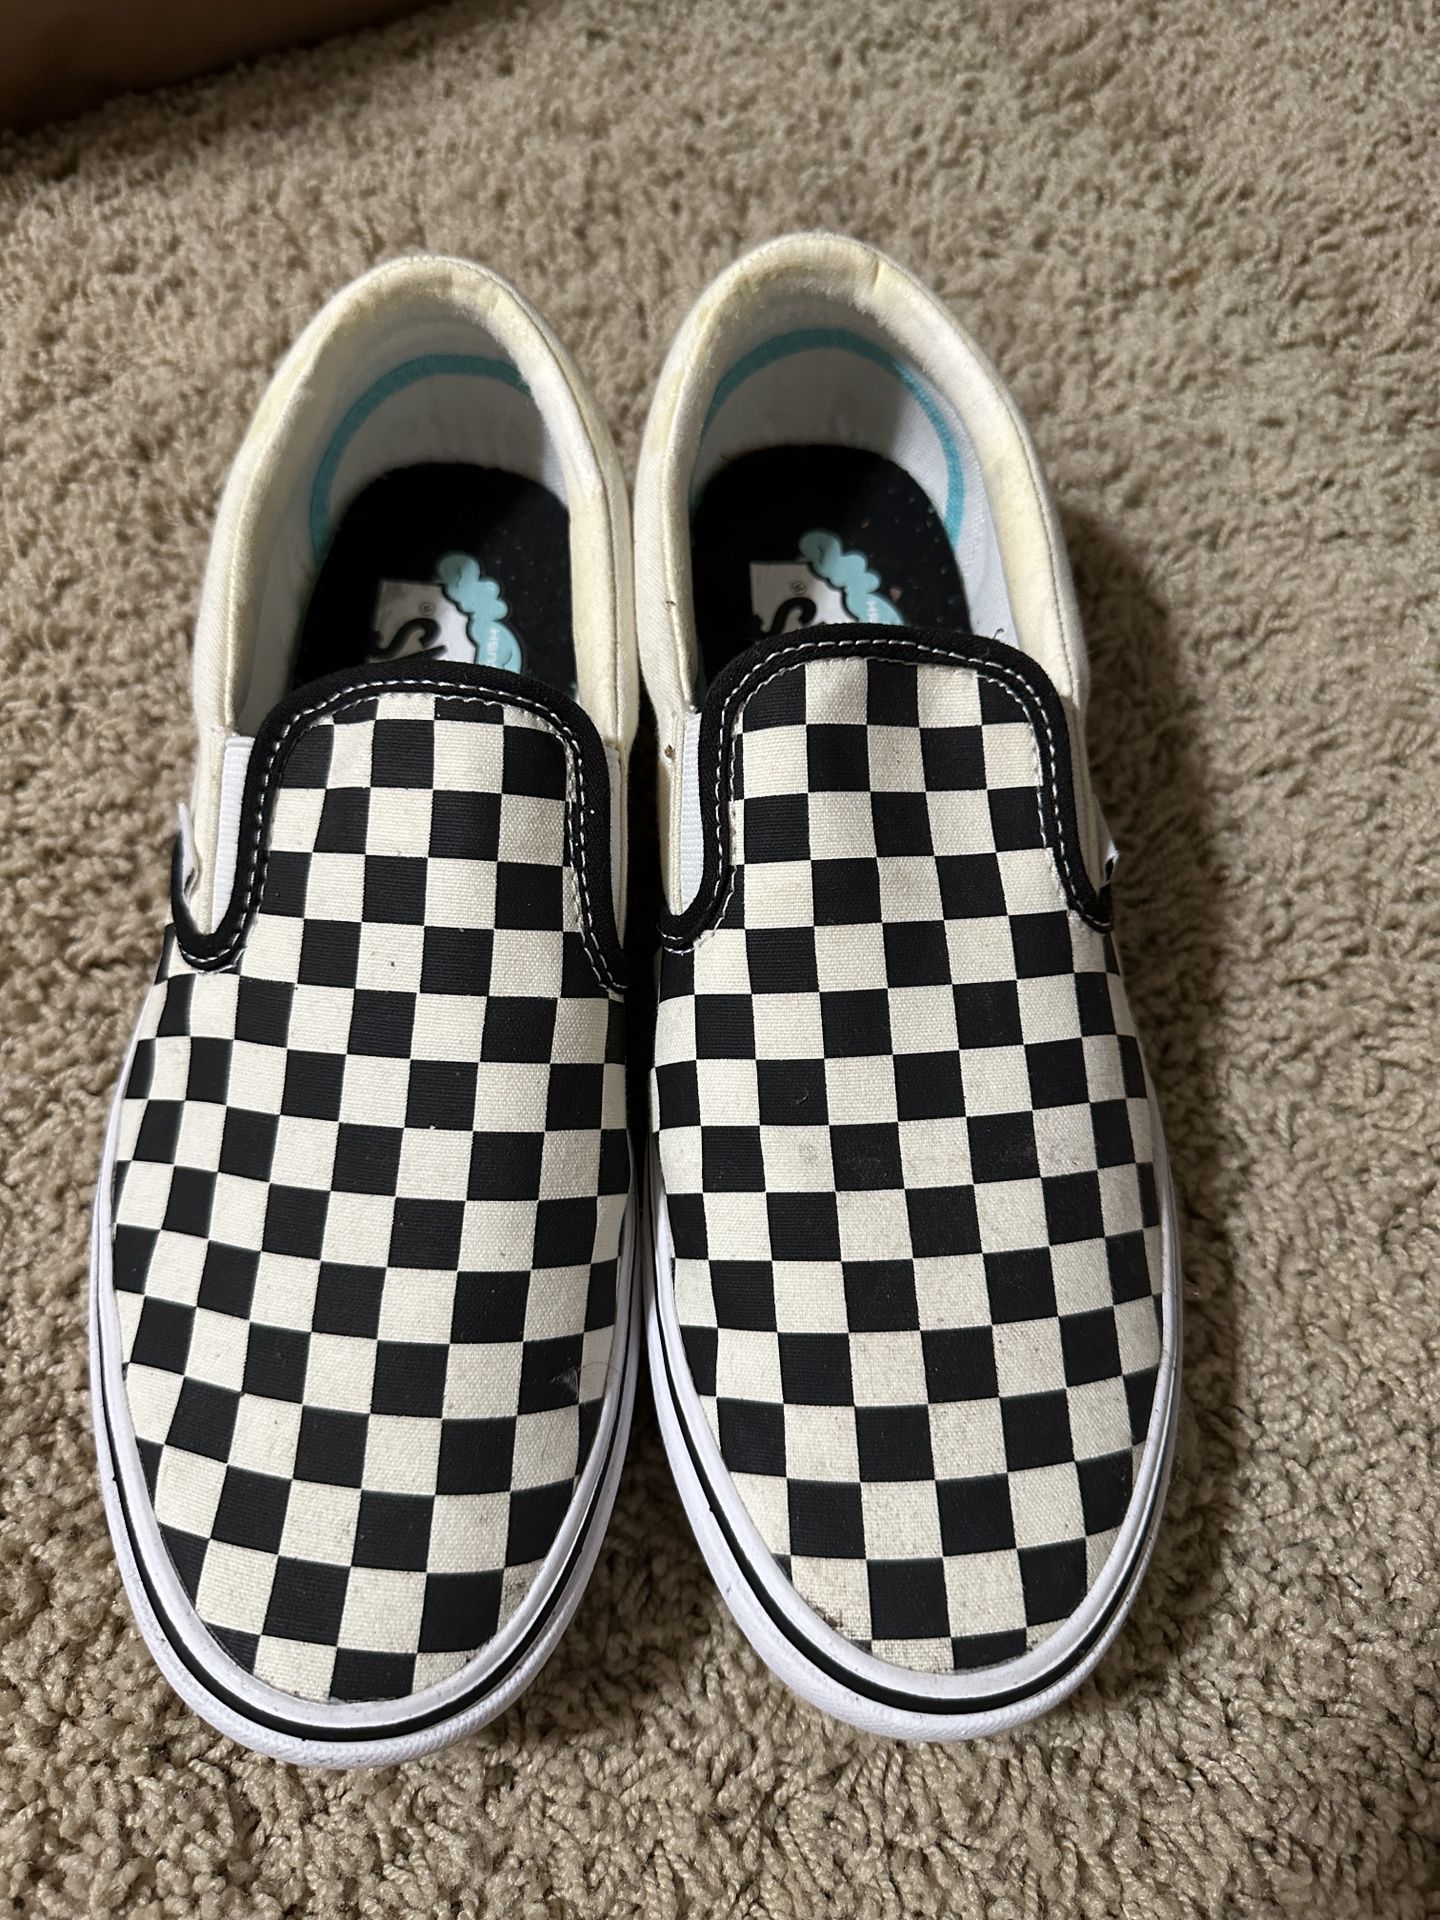 Vans Black and White Checkered Slip-On Shoes (Men’s size 9.5